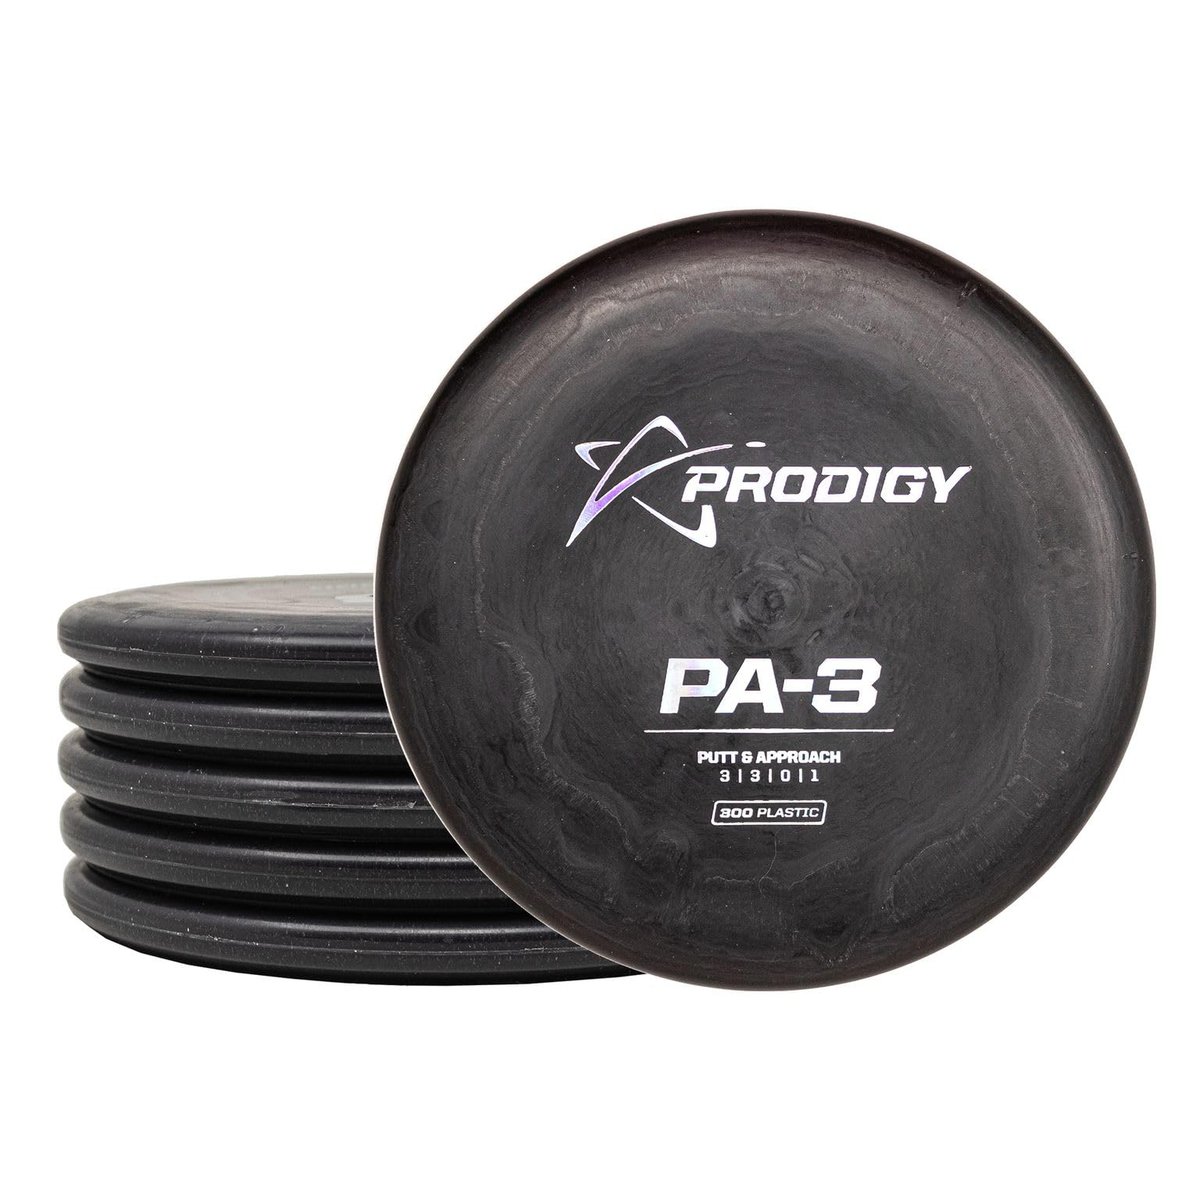 Prodigy Disc 300 PA-3 Disc Golf Putter Pack, Best Disc Golf Putters